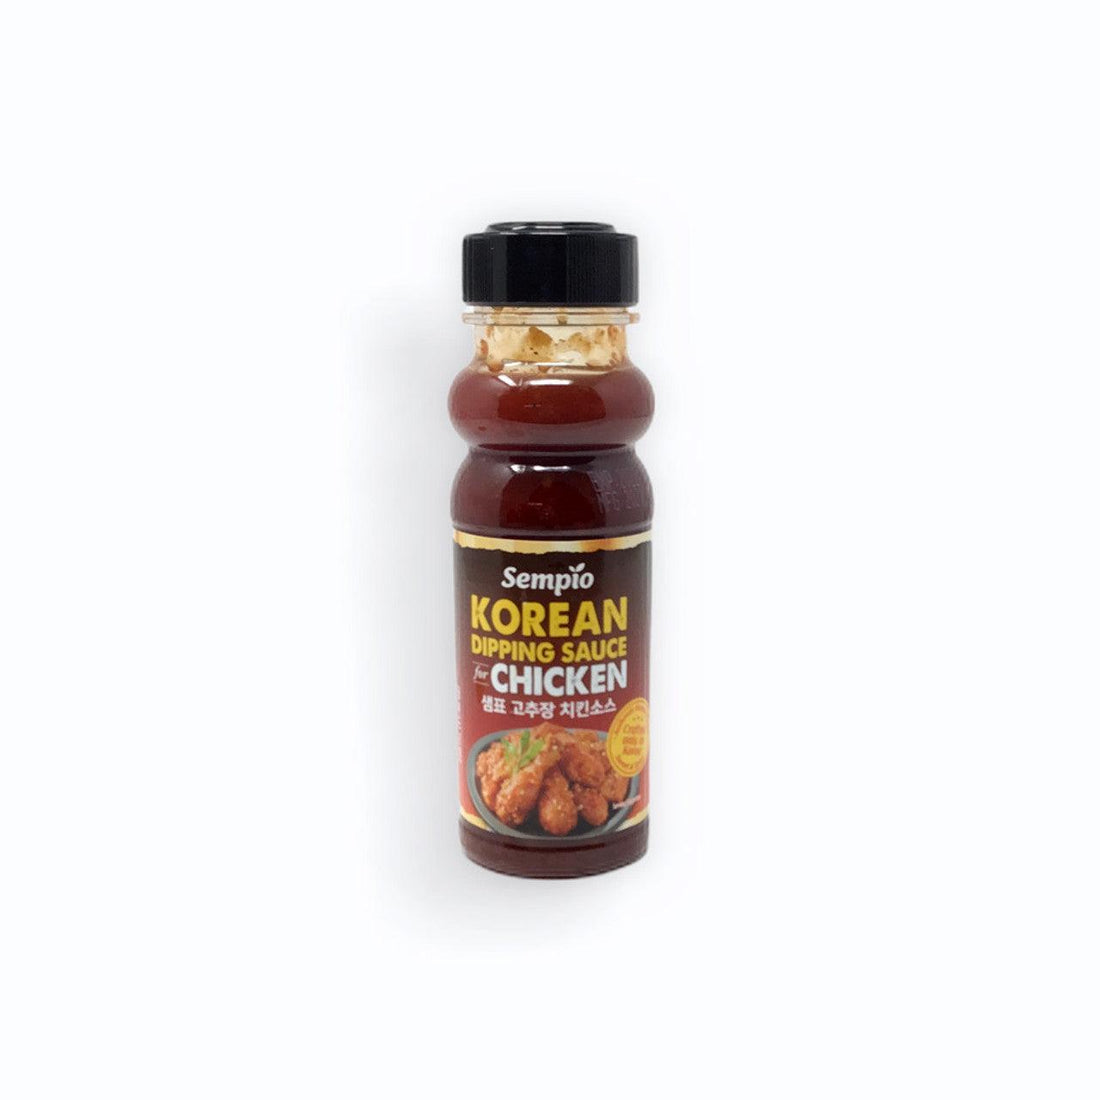 Sempio Chicken Sauce - Gochujang Flavor 8.28oz(250ml) - Anytime Basket